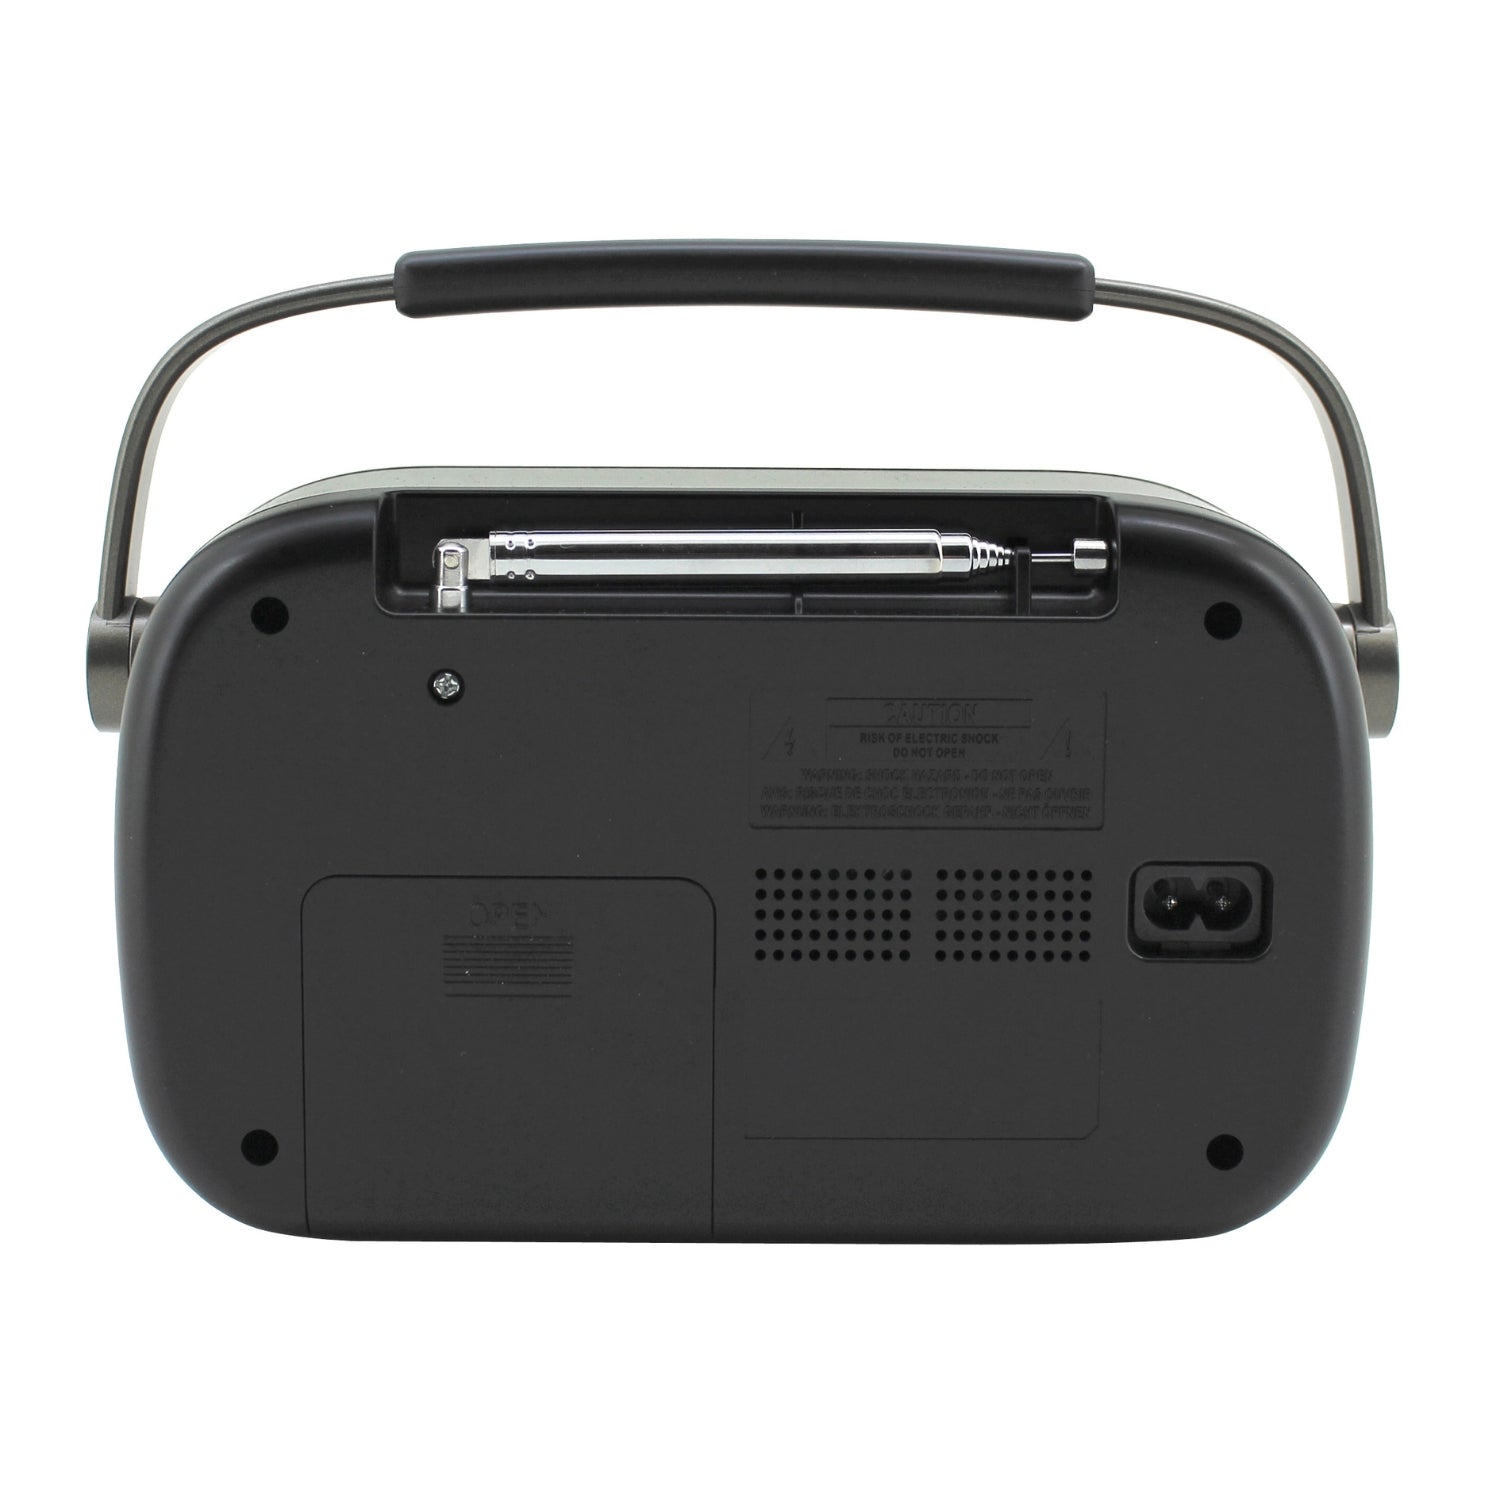 Soundmaster DAB280SW tragbares DAB+ und UKW-RDS Digitalradio mit Kopfhörerbuchse